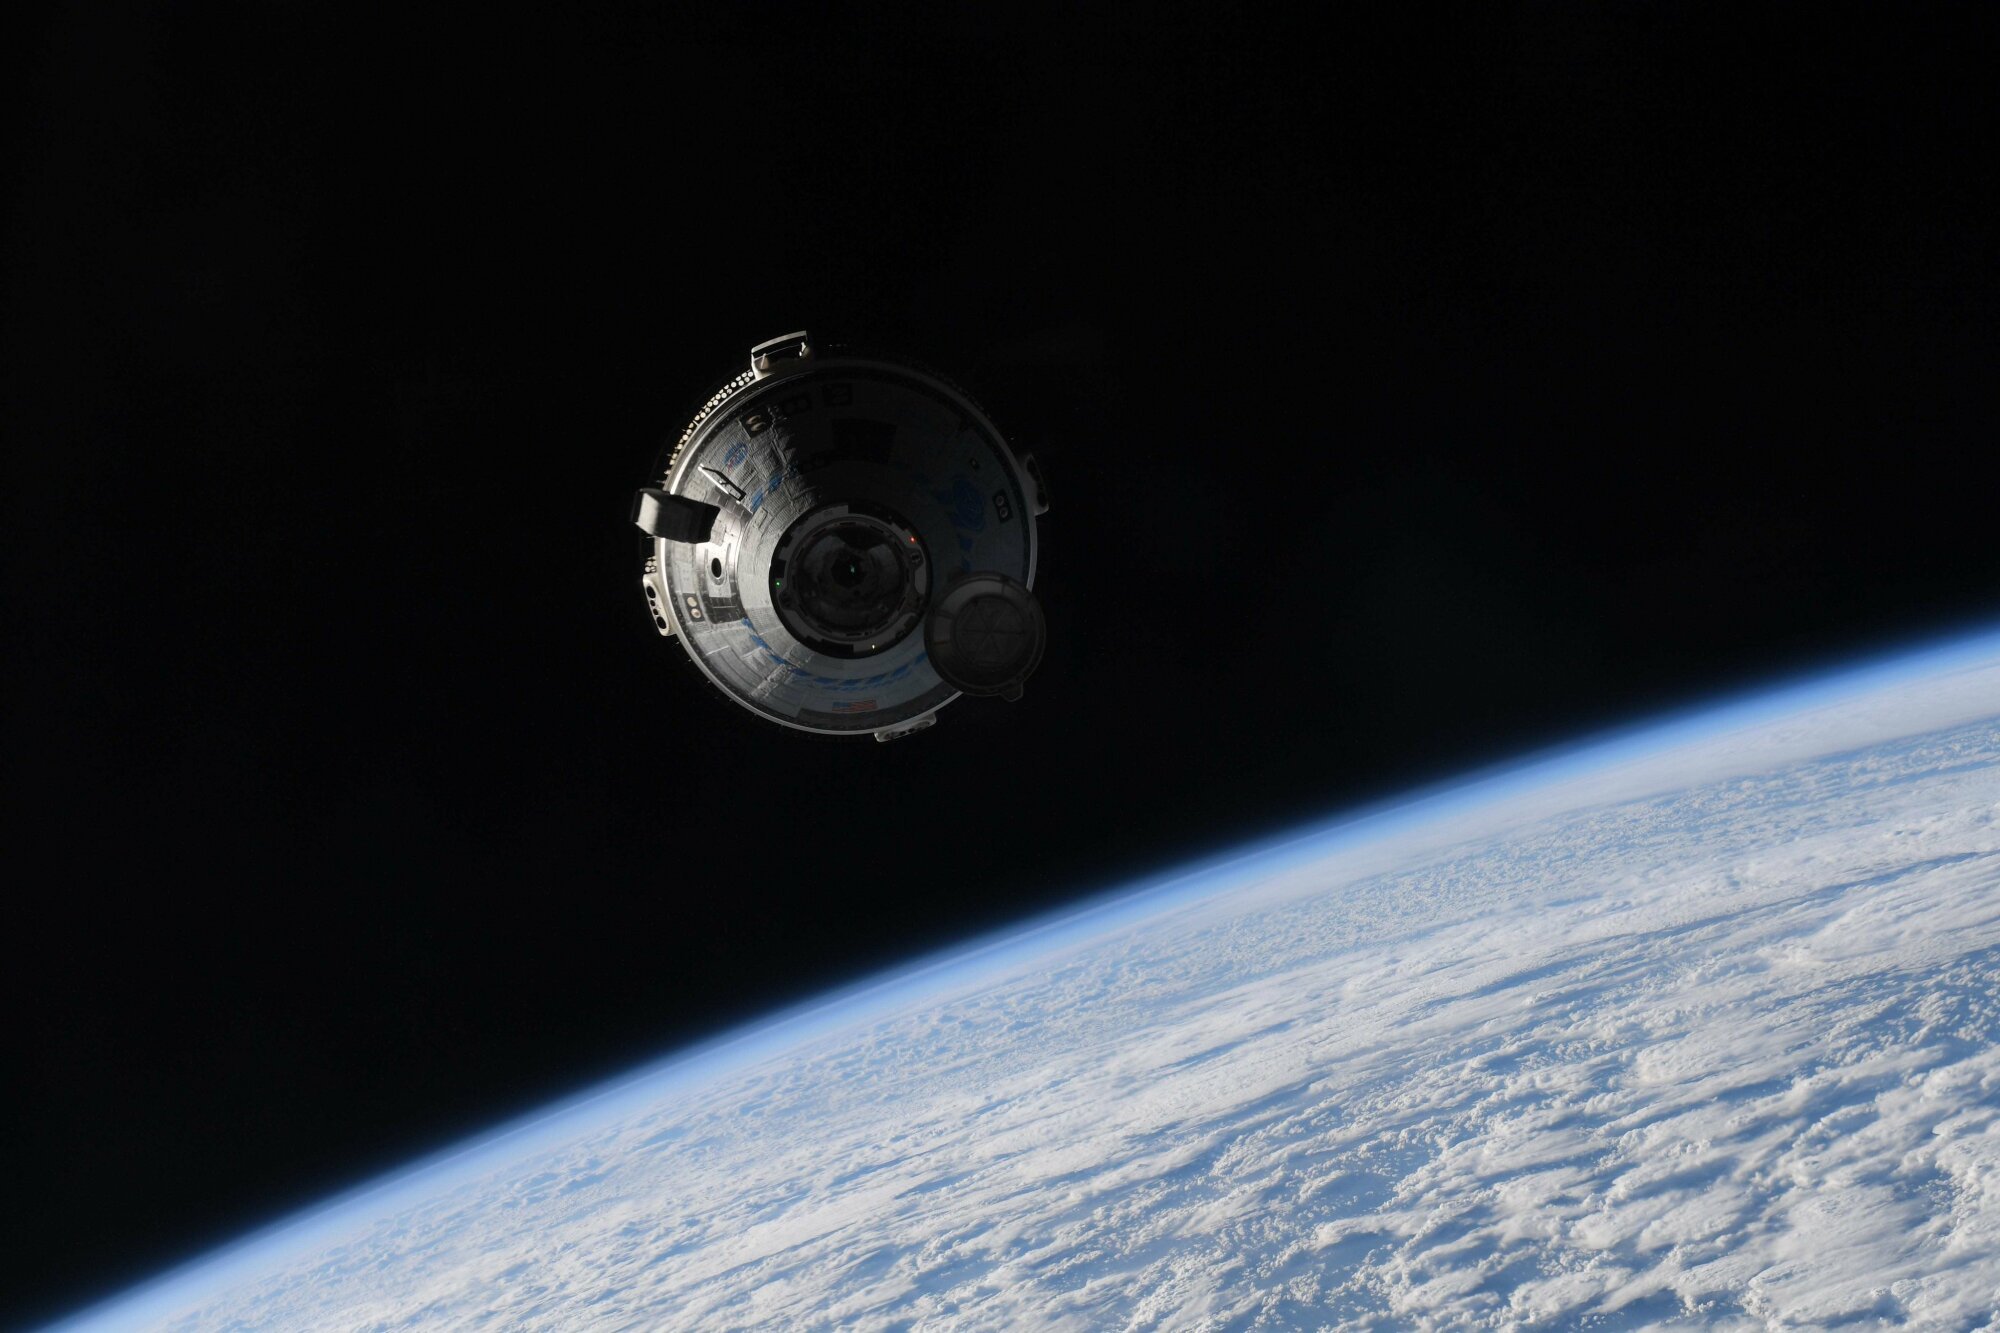 Boeing Starliner preparing to dock at International Space Station